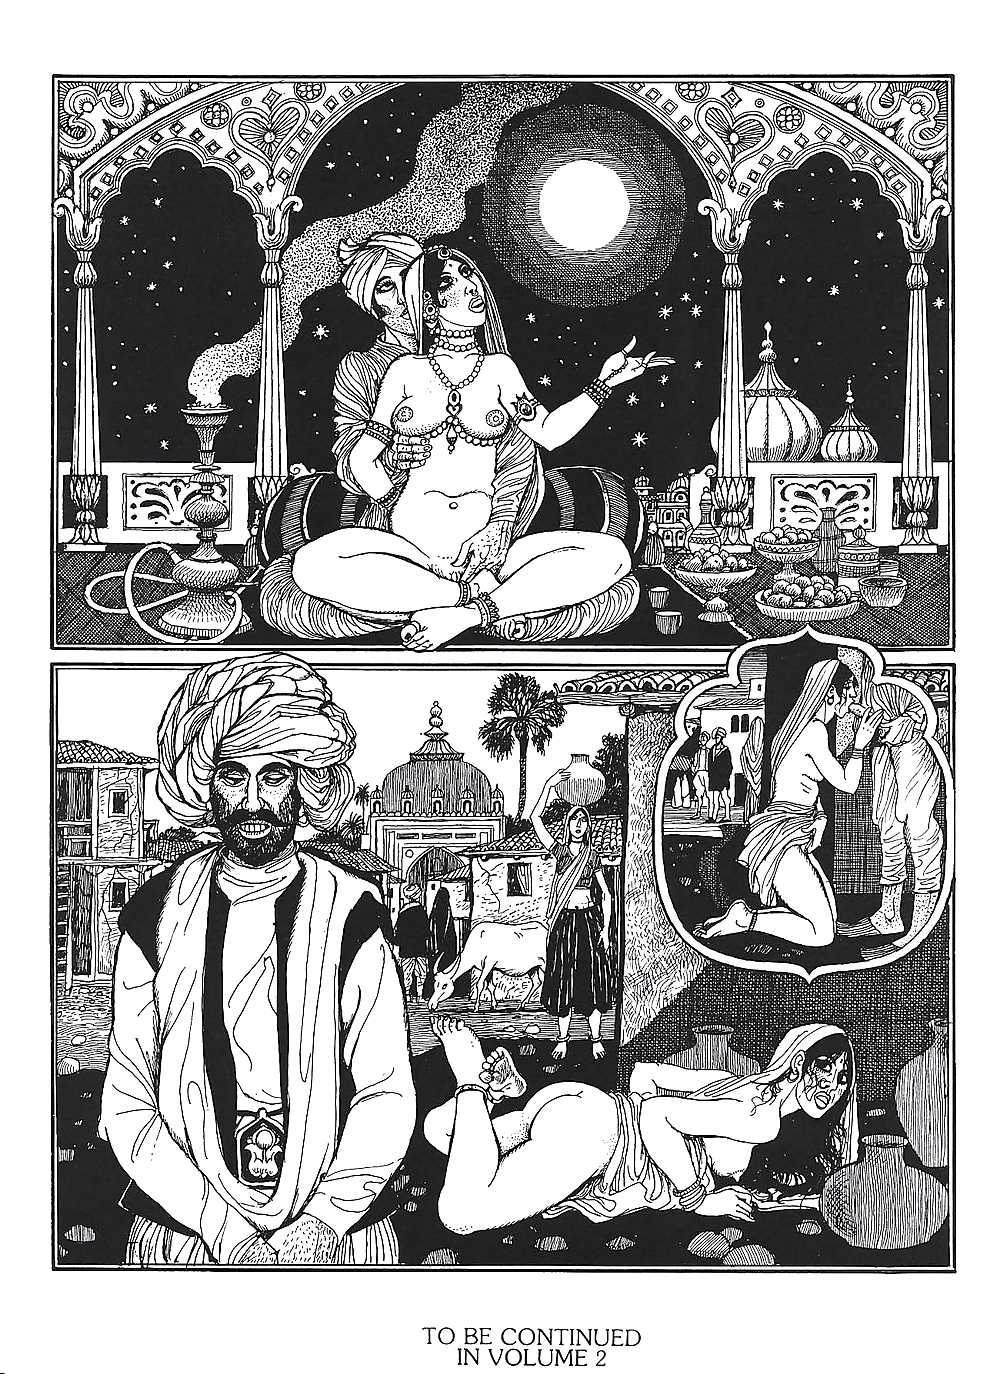 Livre érotique Illustration 23 - Kama Sutra Vol. 1 + 2 #19109650